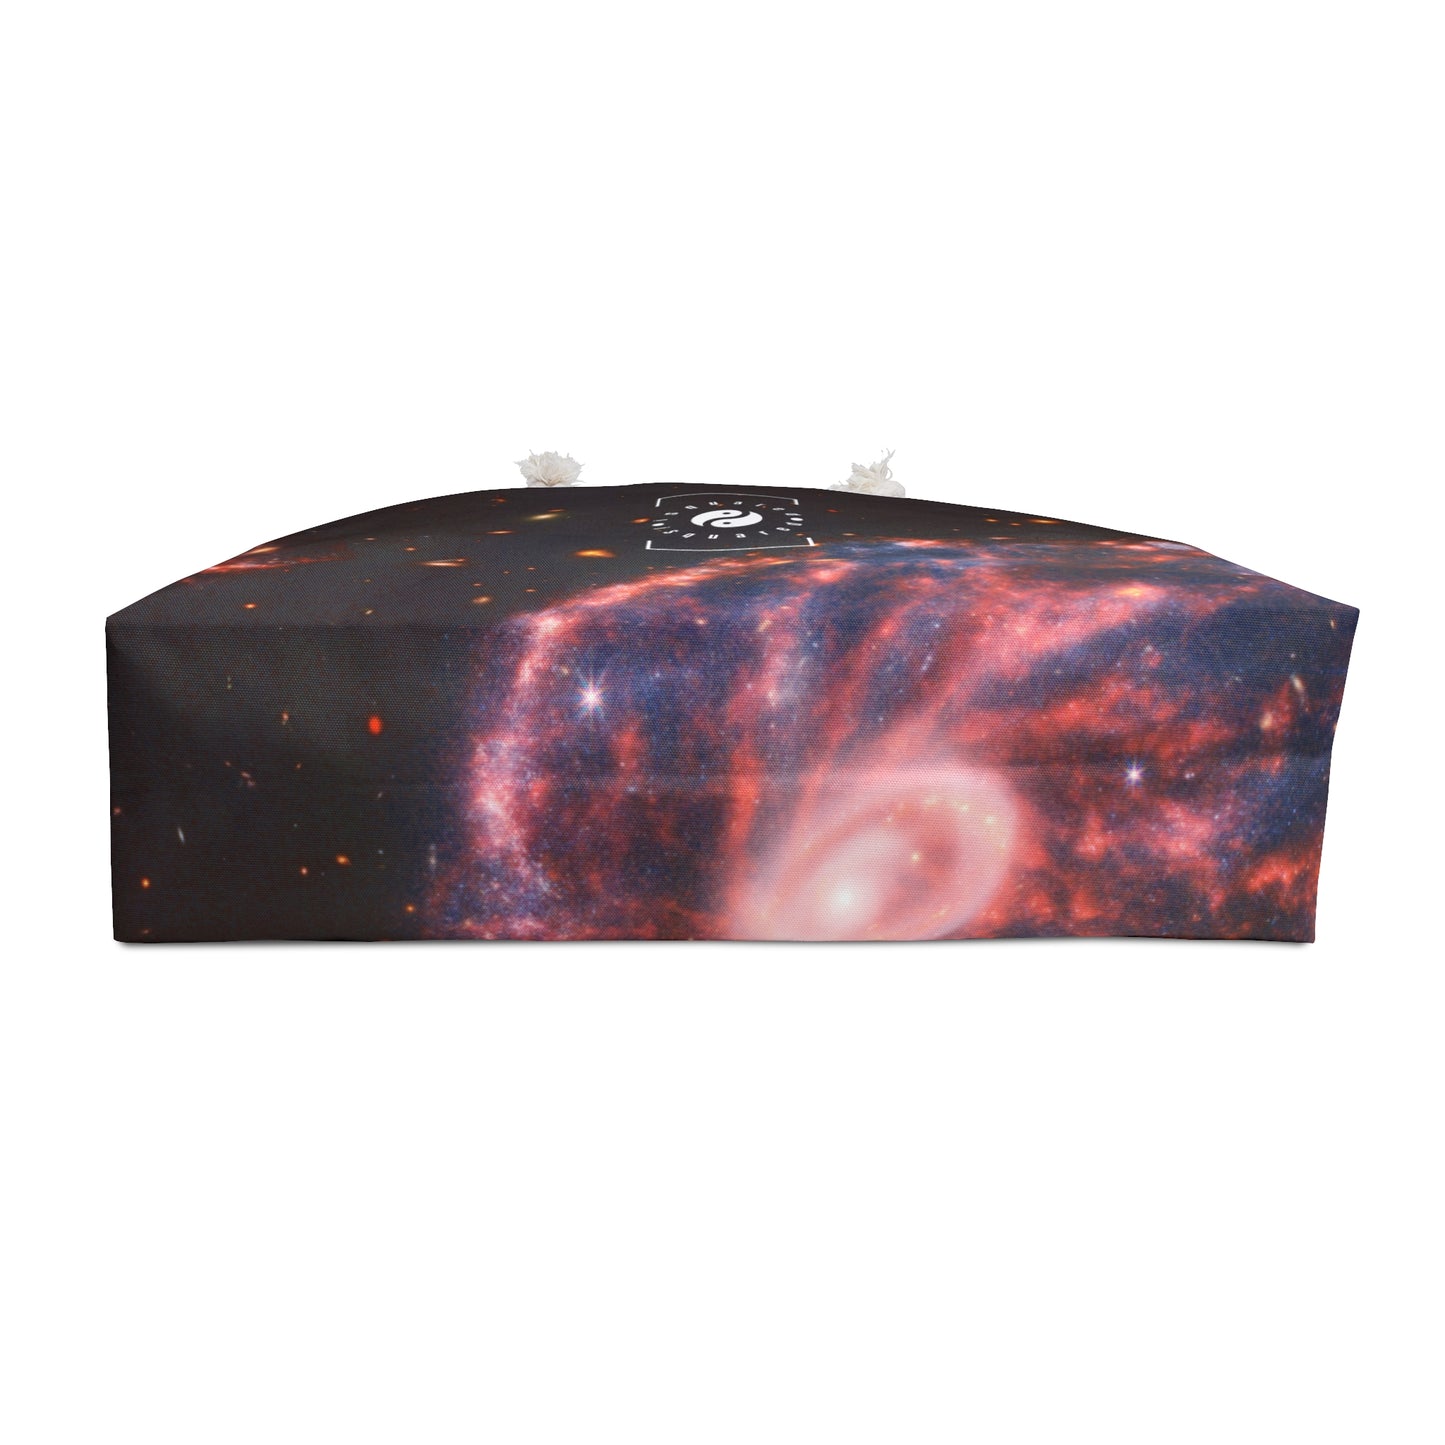 Cartwheel Galaxy (NIRCam and MIRI Composite Image) - Casual Yoga Bag